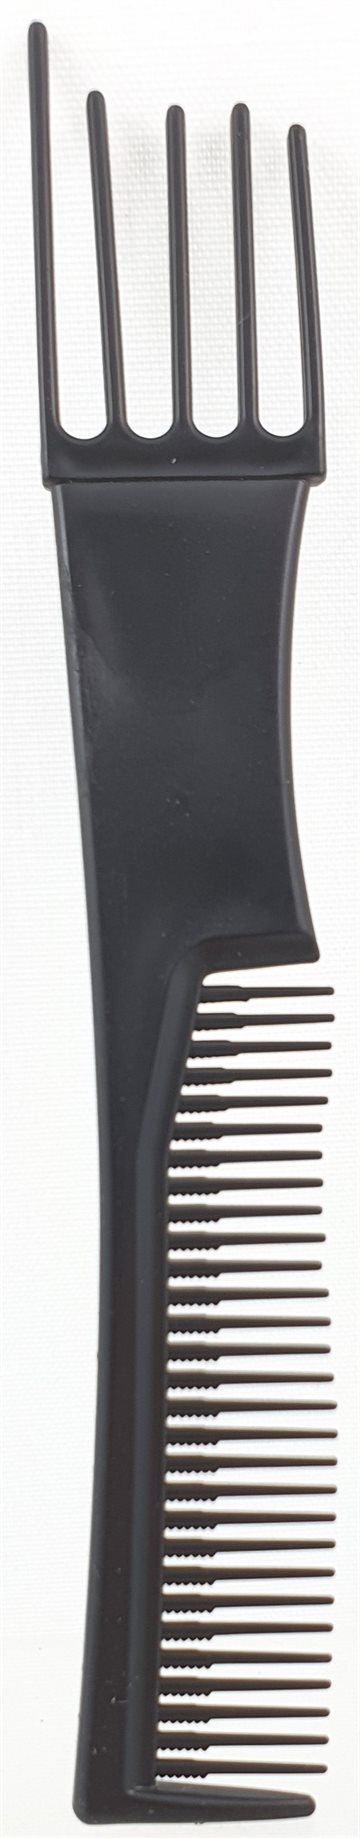 Hair Comb double side teeth